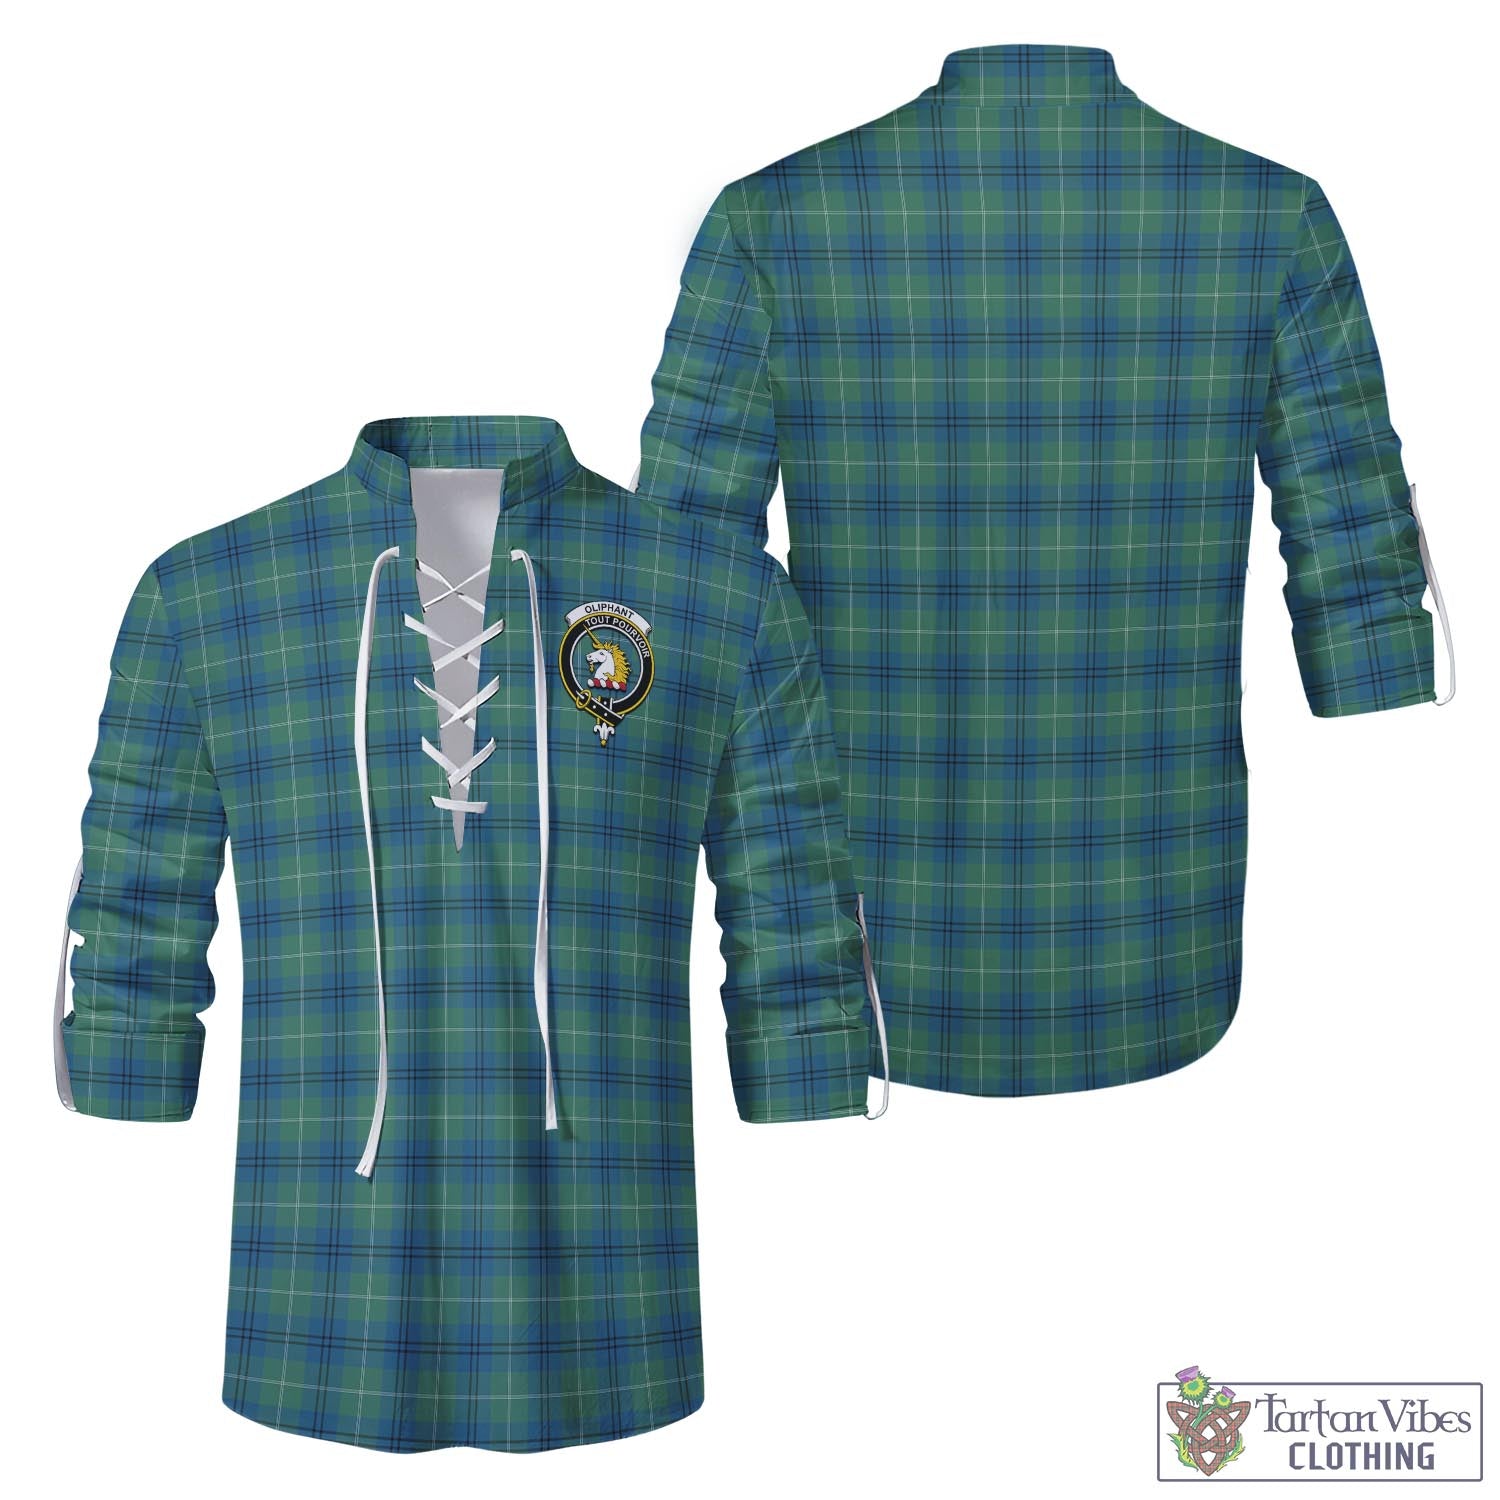 Tartan Vibes Clothing Oliphant Ancient Tartan Men's Scottish Traditional Jacobite Ghillie Kilt Shirt with Family Crest